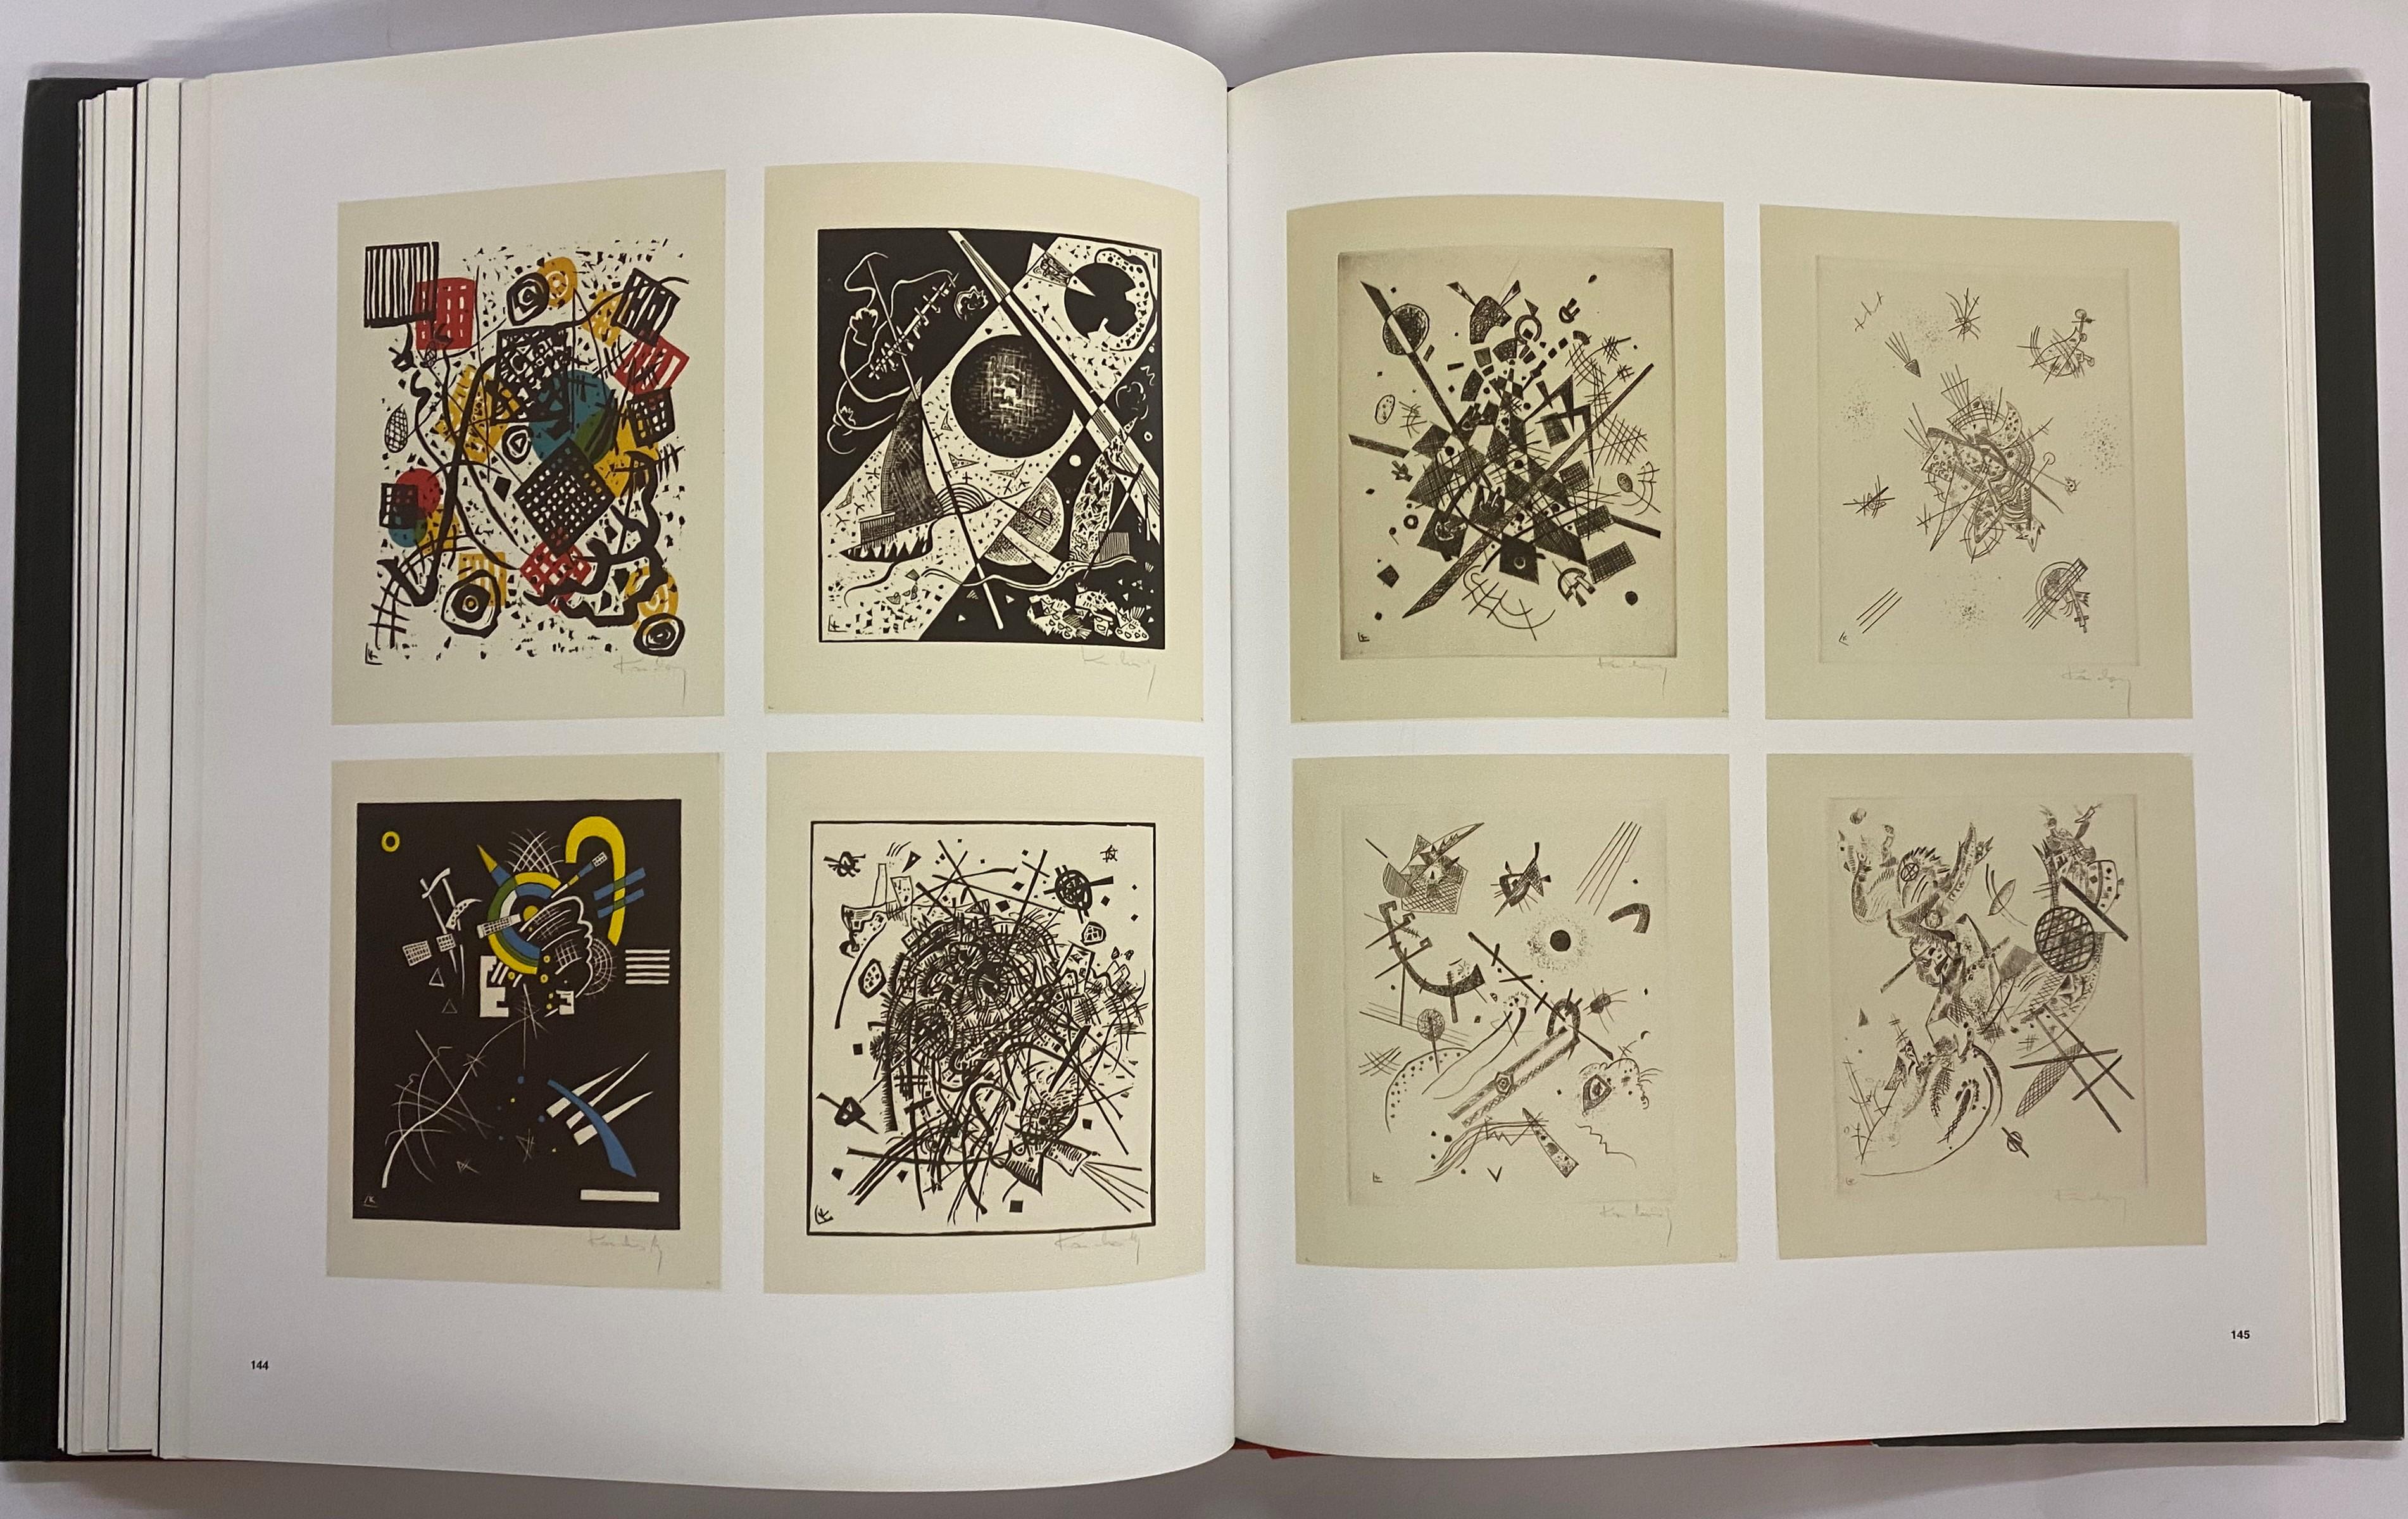 Vasily Kandinsky, from Blaue Reiter to the Bauhaus, 1910-1925 (Book) For Sale 4